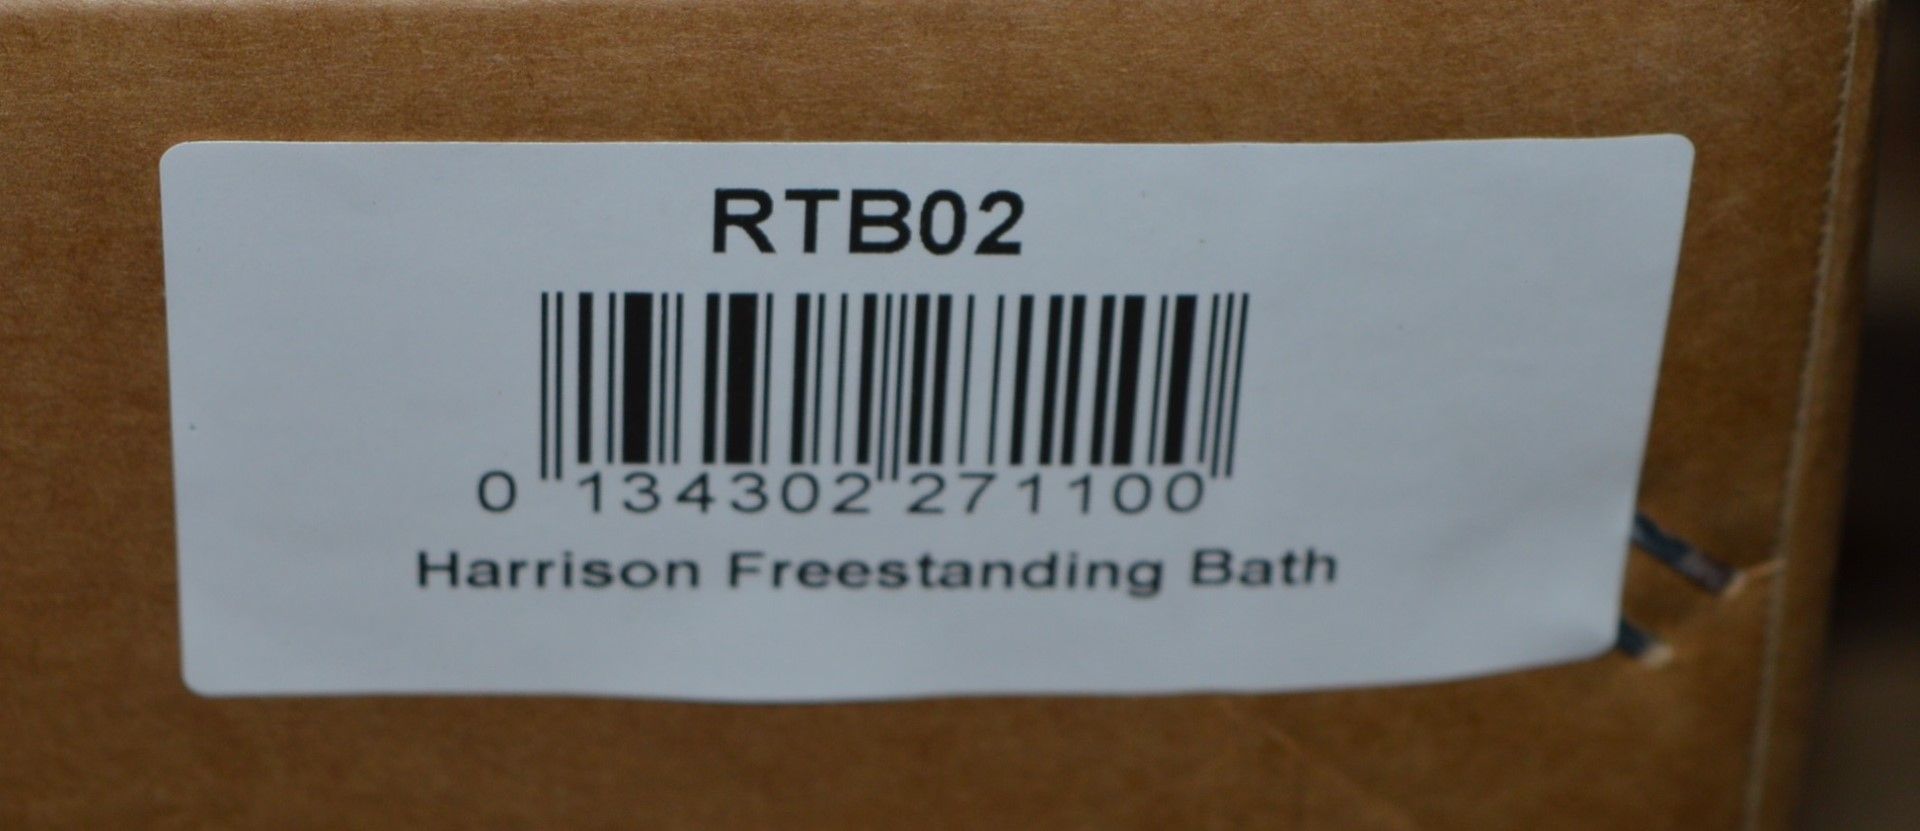 1 x Harrison Freestanding Bath 1790 x 810mm  - Unused Stock - Beautiful oval Design - Highly - Image 4 of 4